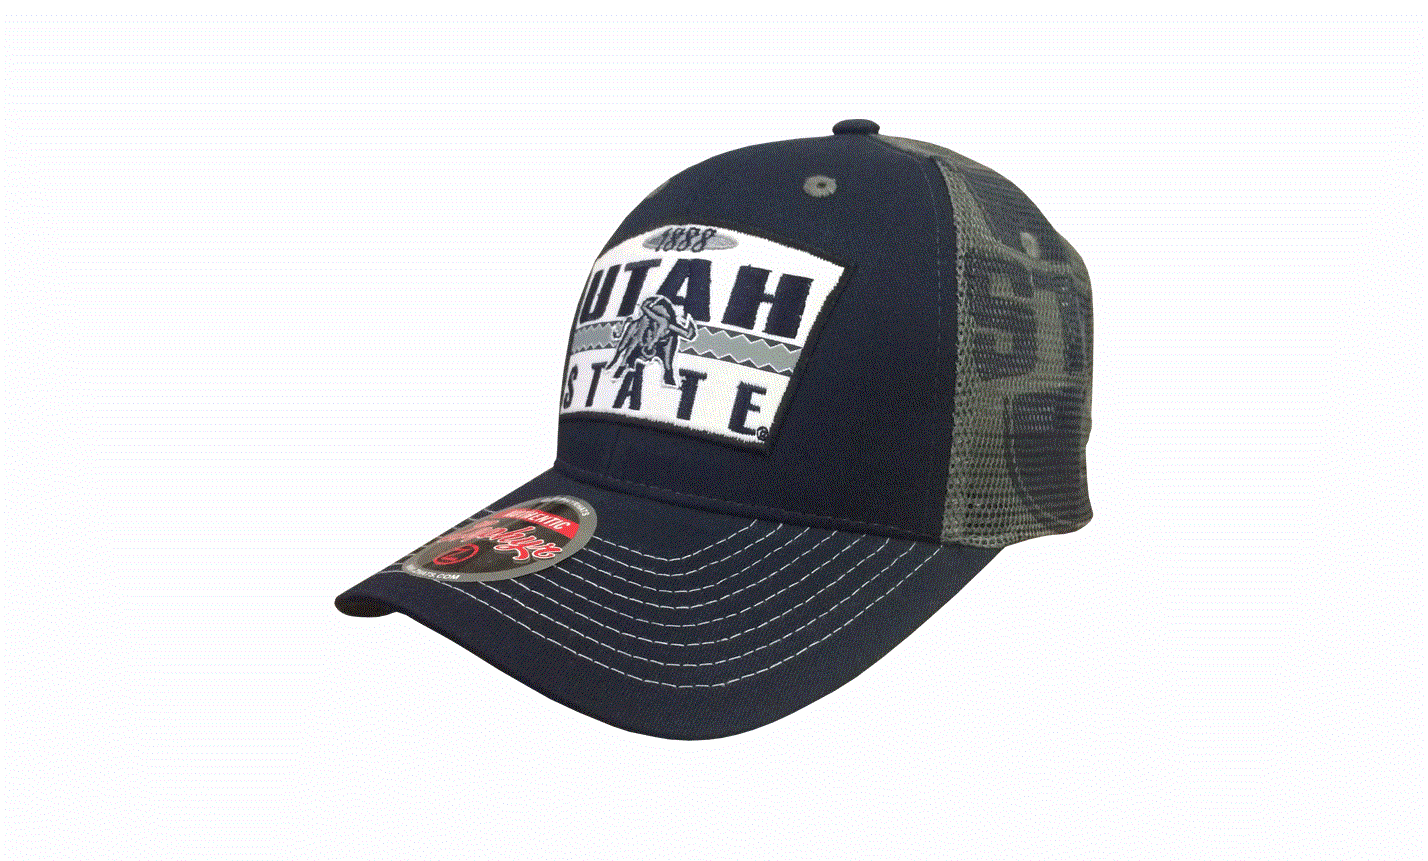 USU Billboard Trucker Mesh Hat